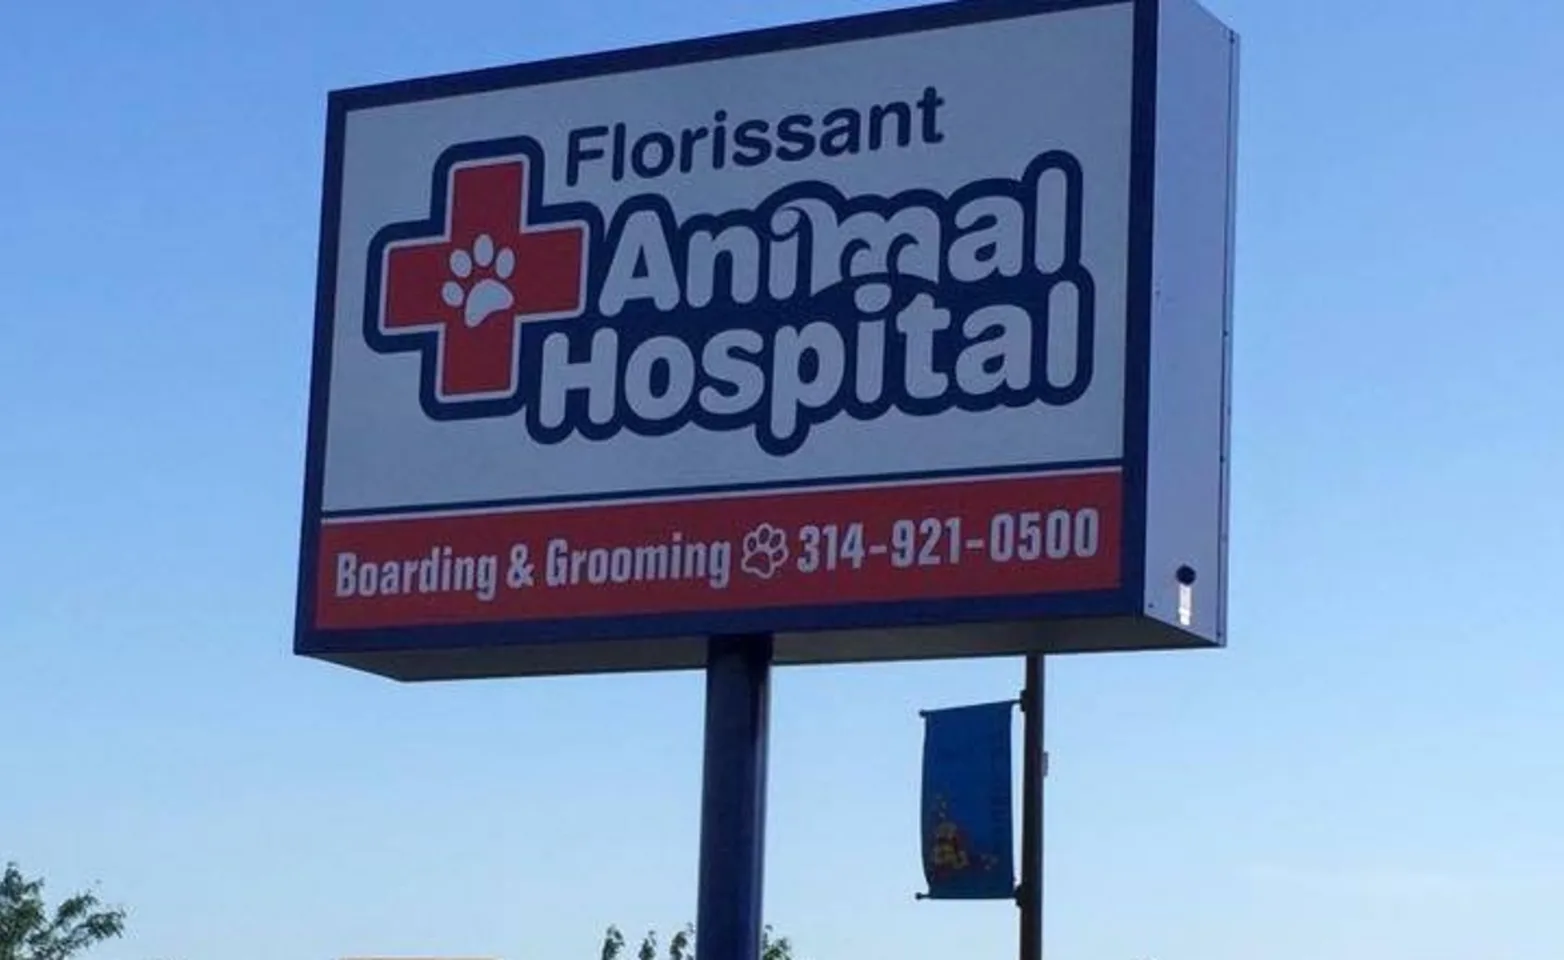 Florissant Animal Hospital 